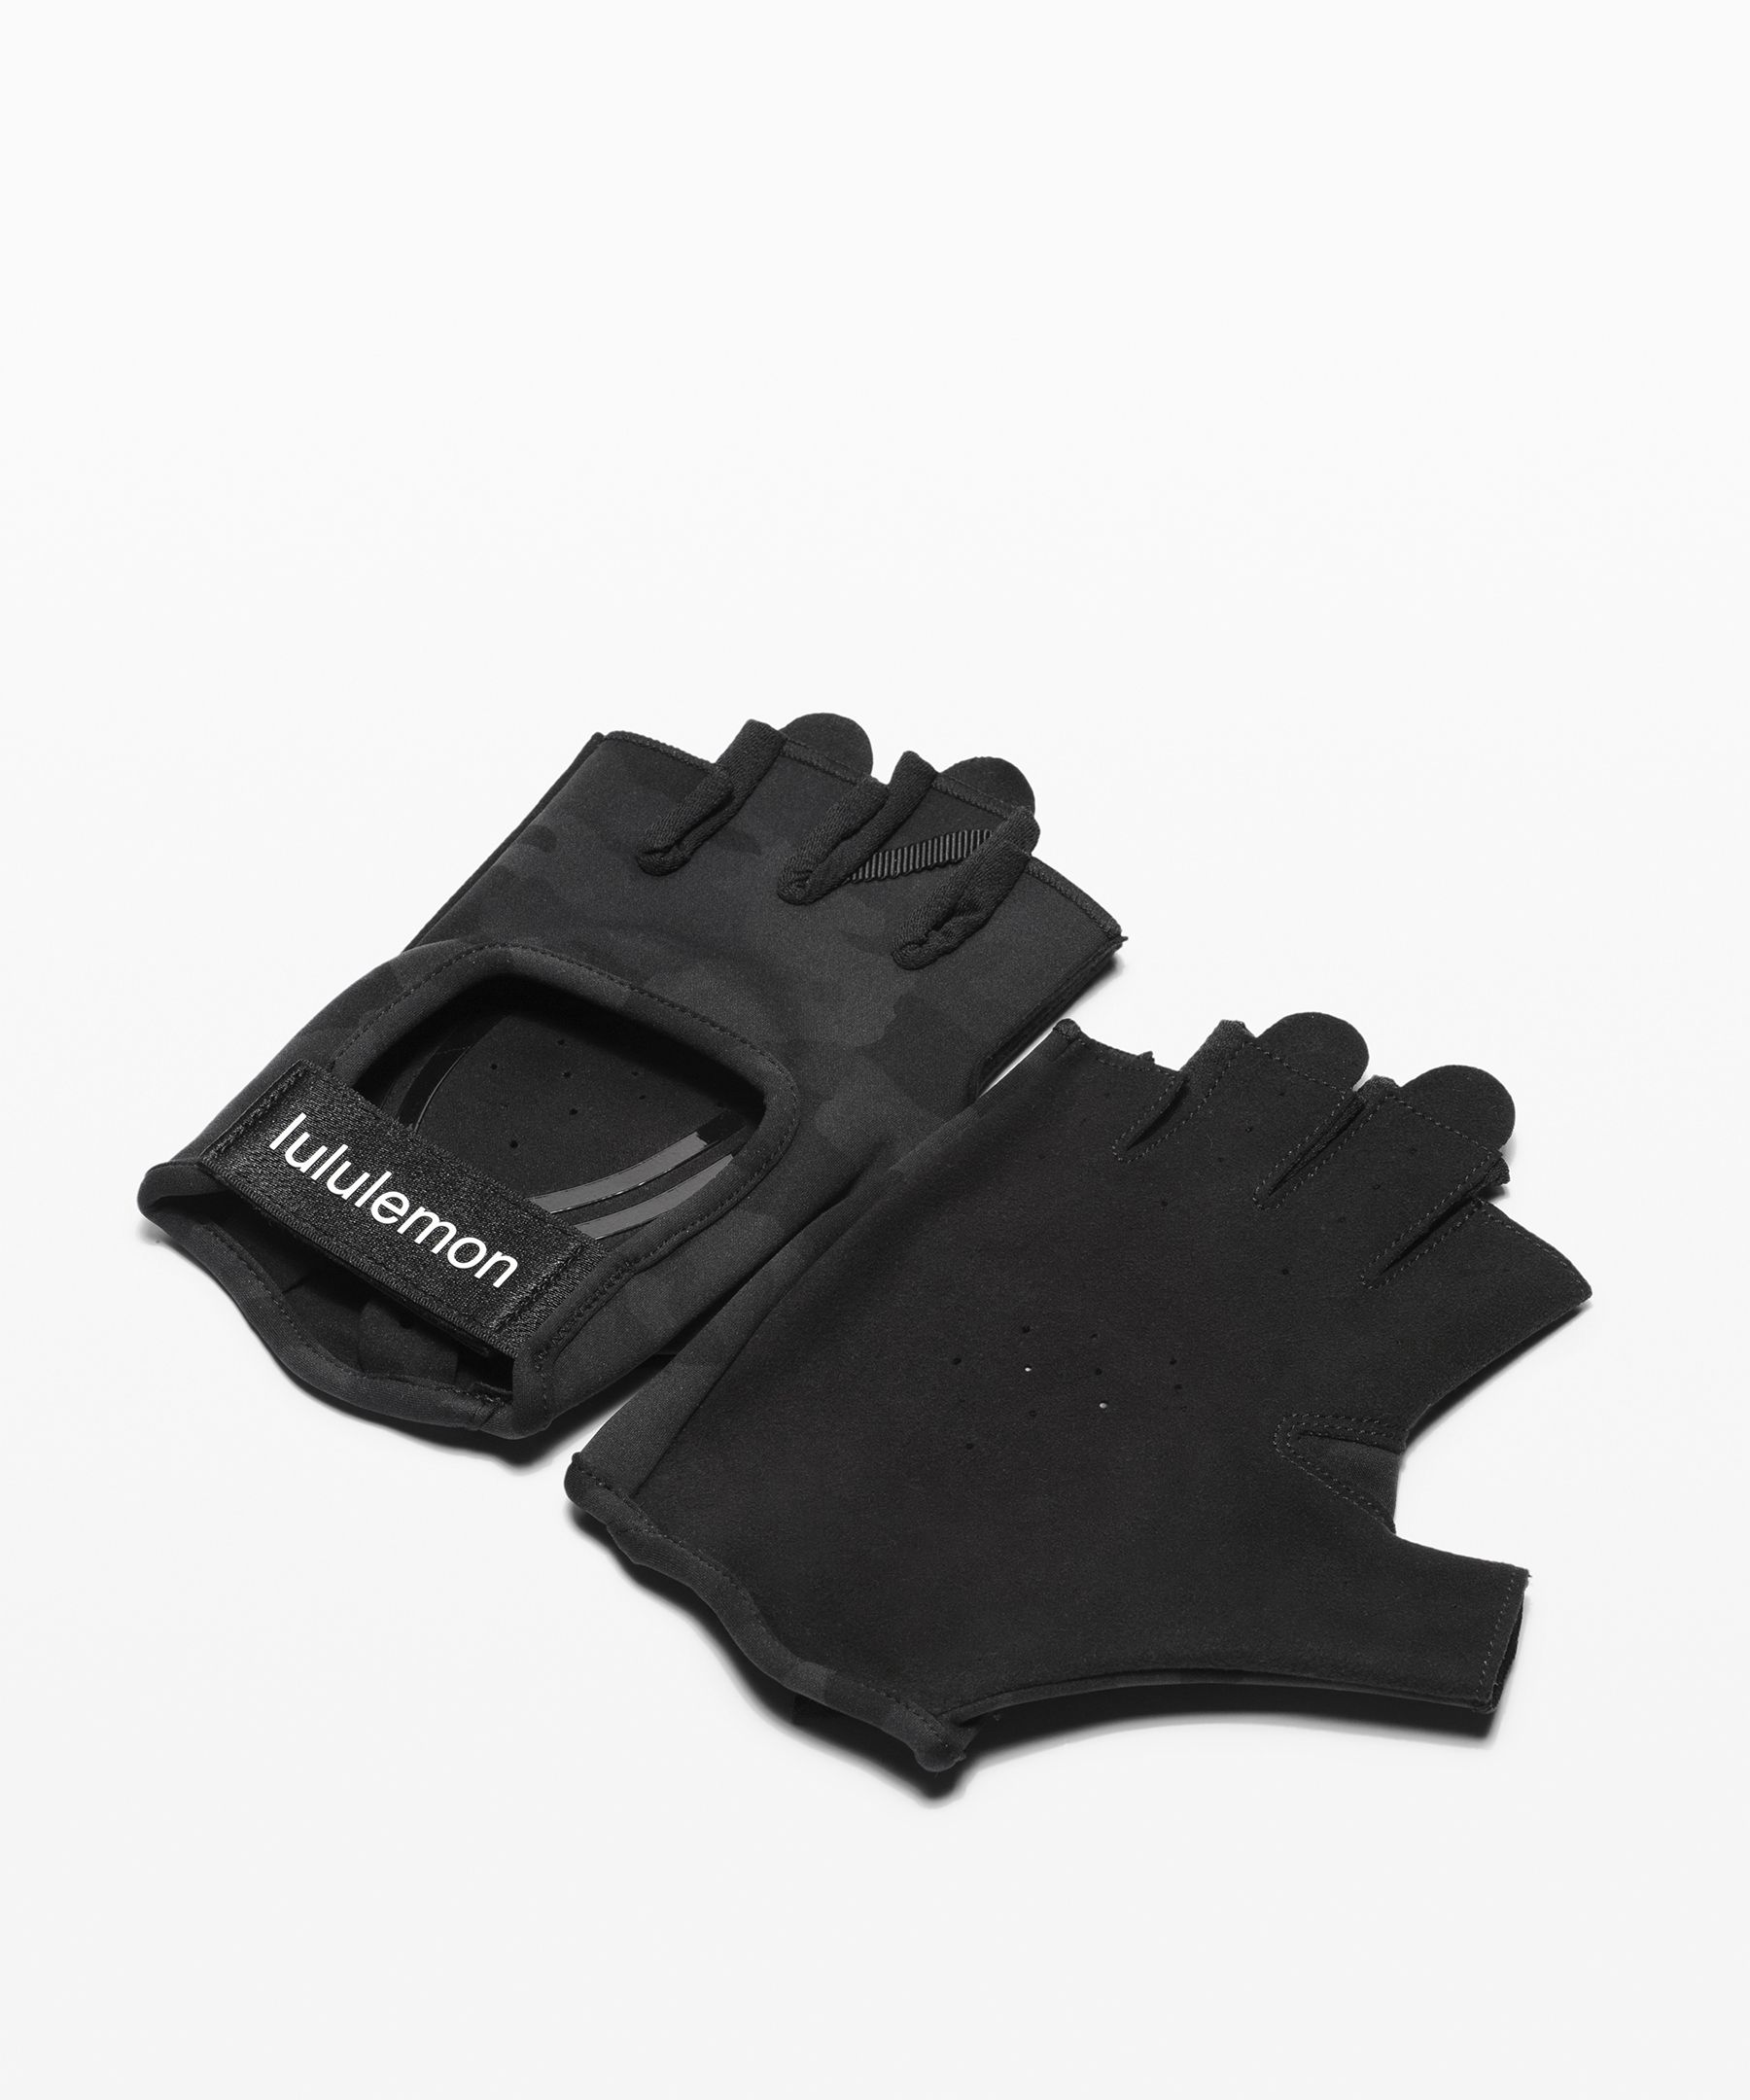 Lululemon Uplift Training Gloves In Printed